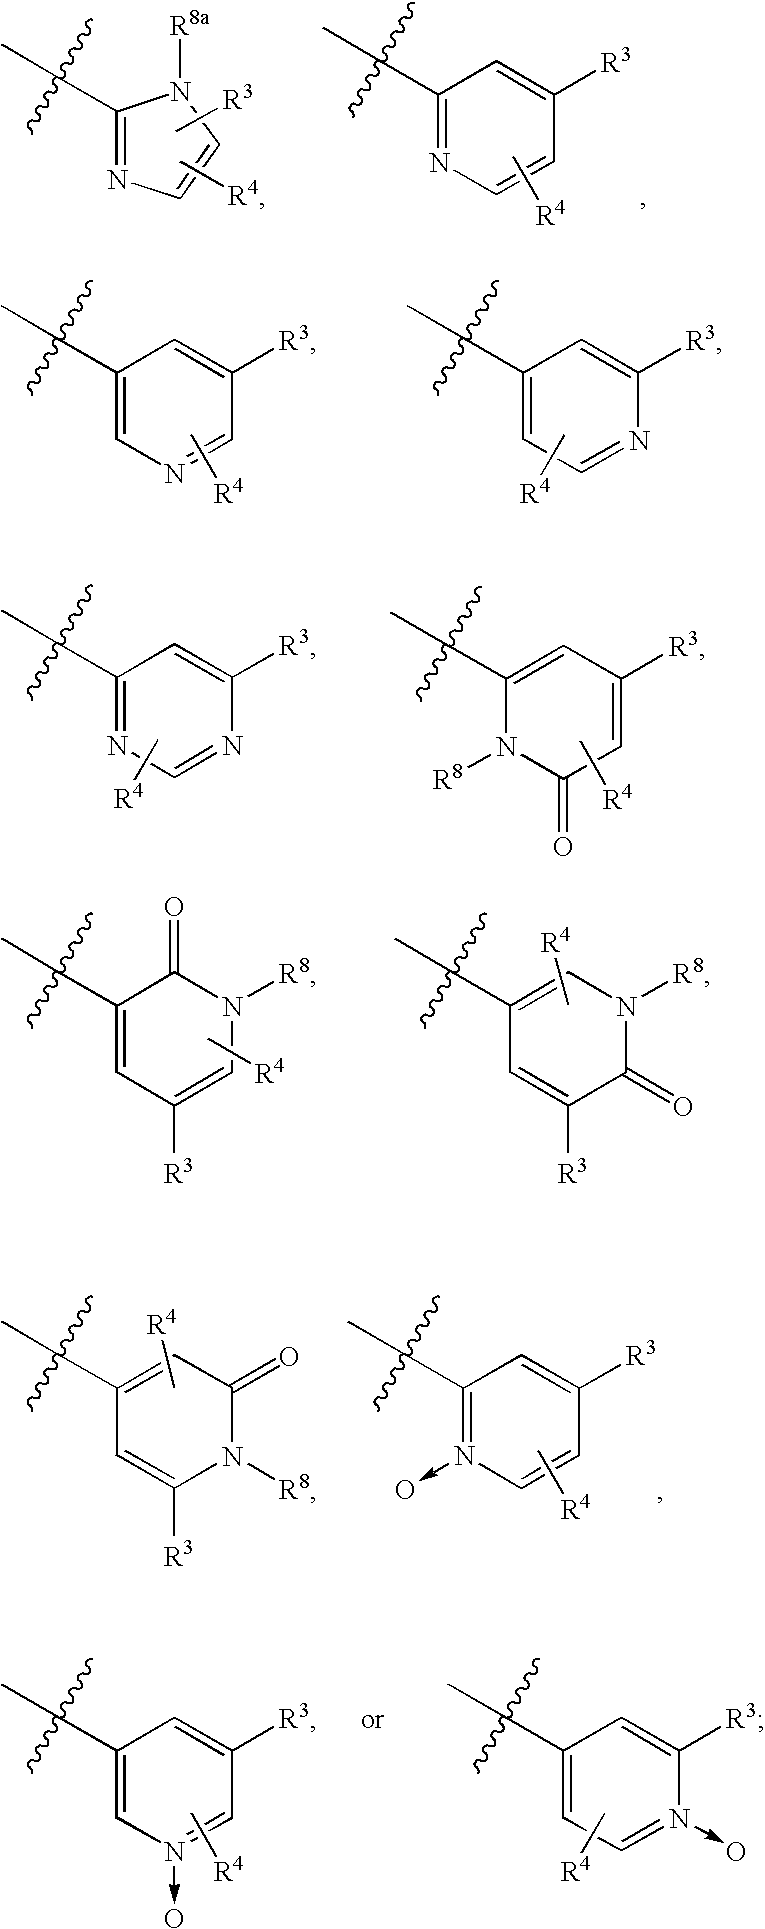 Arylpropionamide, arylacrylamide, ayrlpropynamide, or arylmethylurea analogs as factor XIa inhibitors